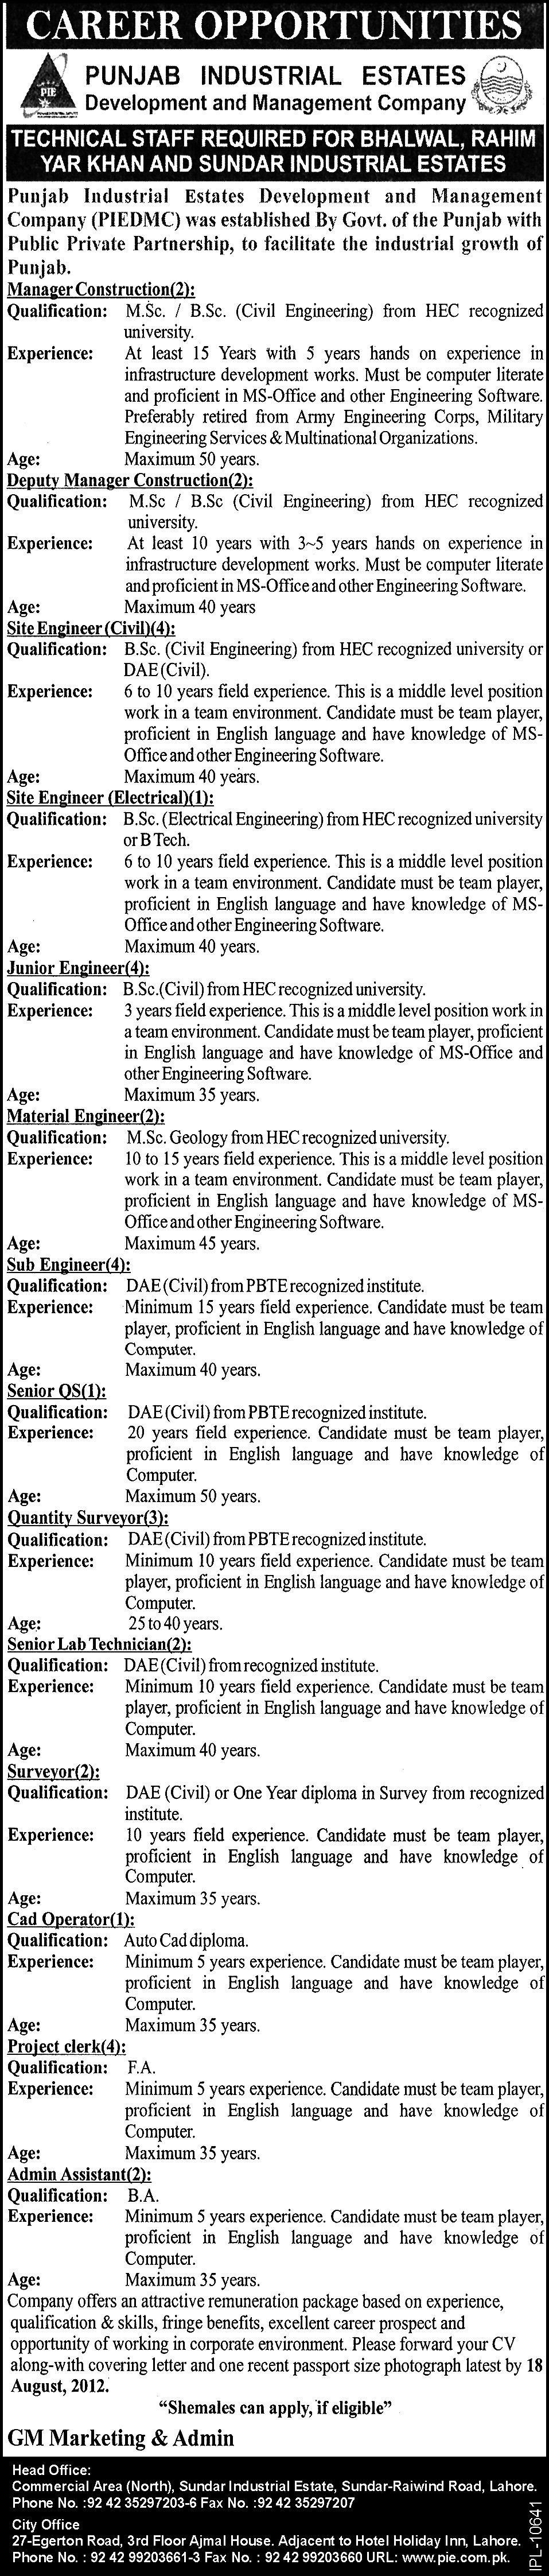 Punjab Industrial Estates Development and Management Company (PIEDMC) Jobs (Government Job)